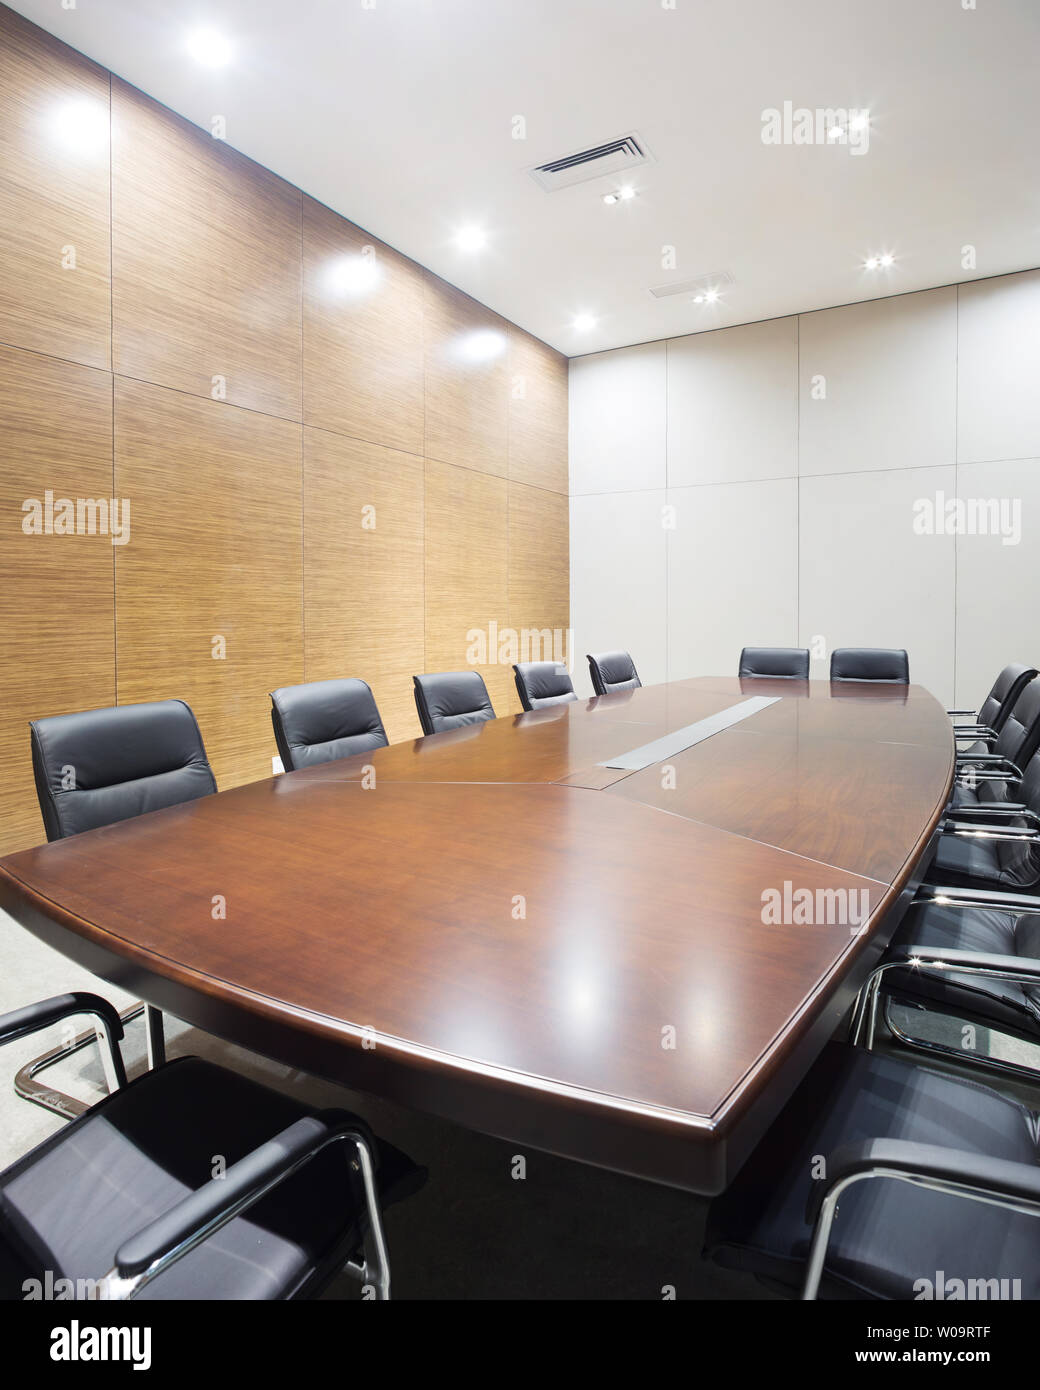 Modern Office Meeting Room Interior Stock Photo 258371807